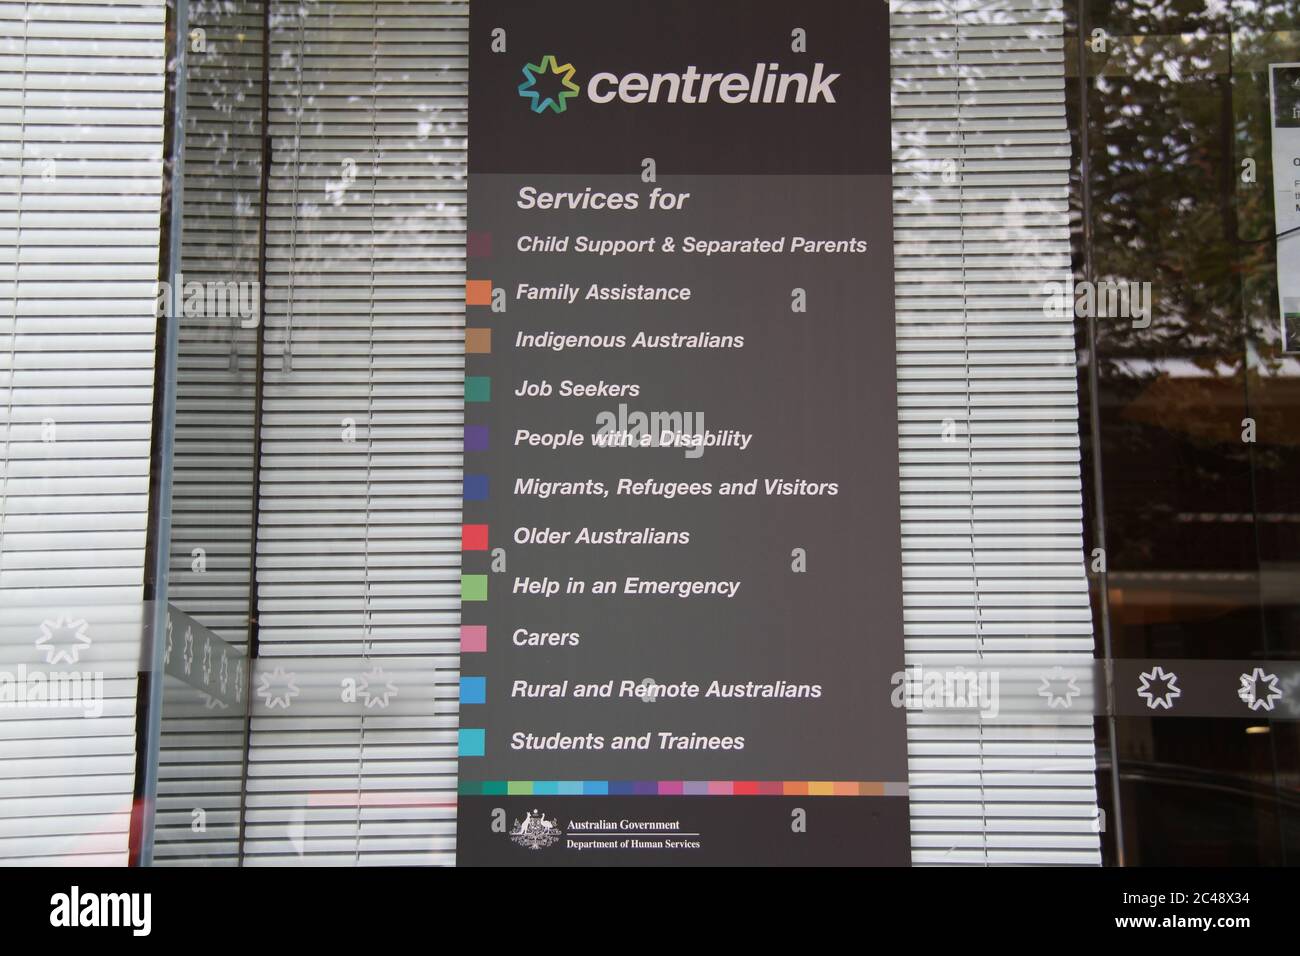 Darlinghurst Centrelink at 137-153 Crown St, Sydney NSW 2010. Stock Photo